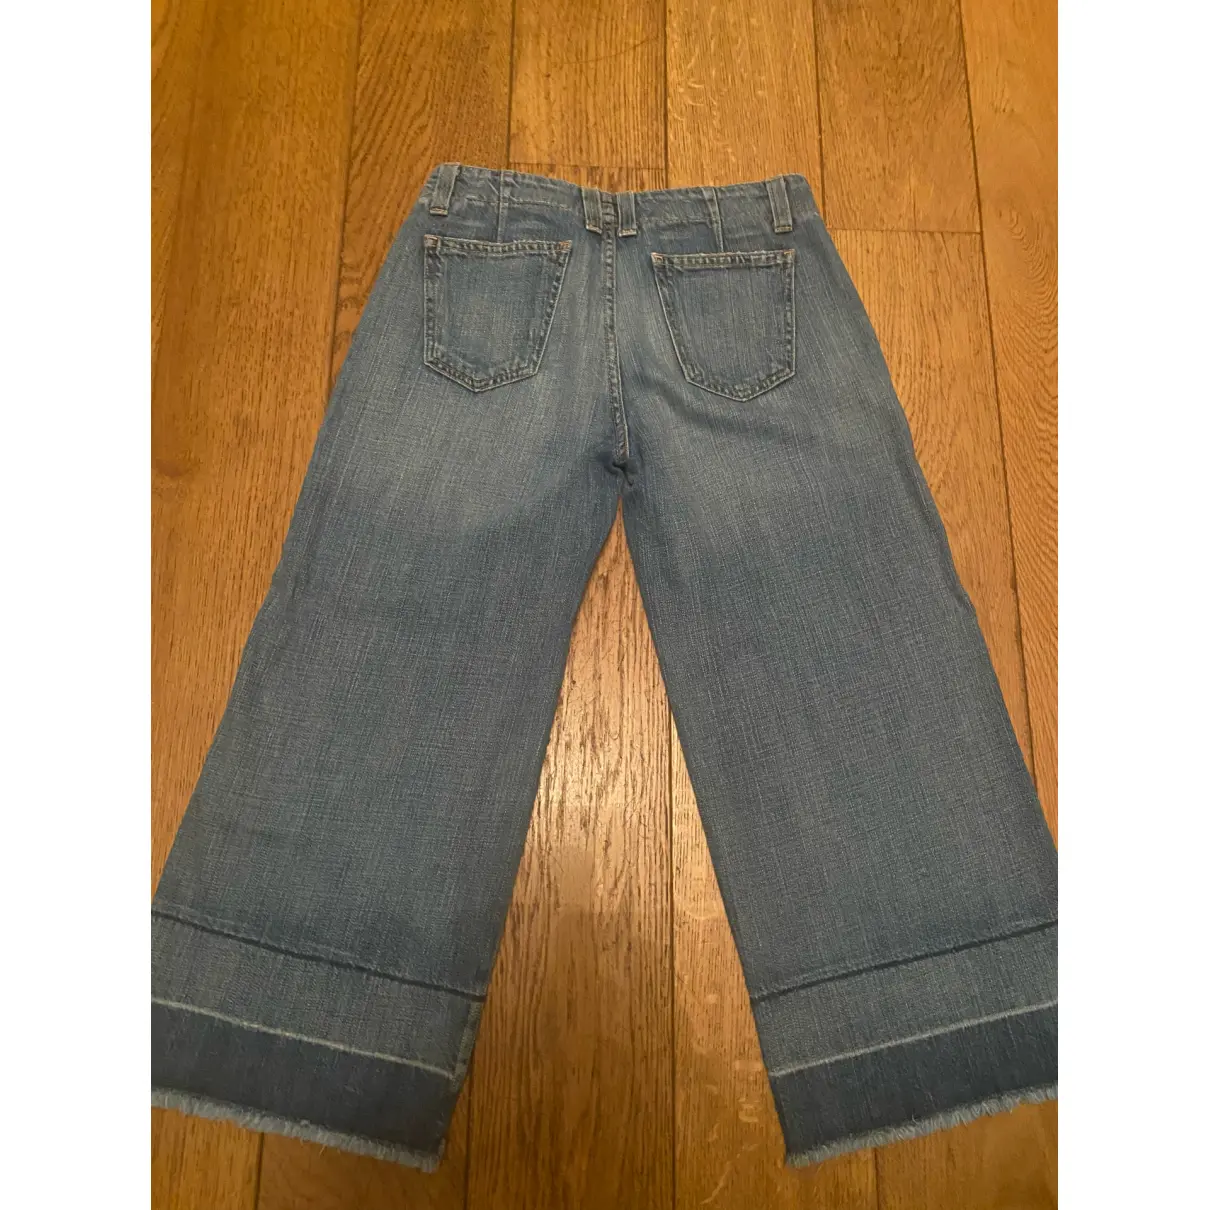 Buy Current Elliott Short jeans online